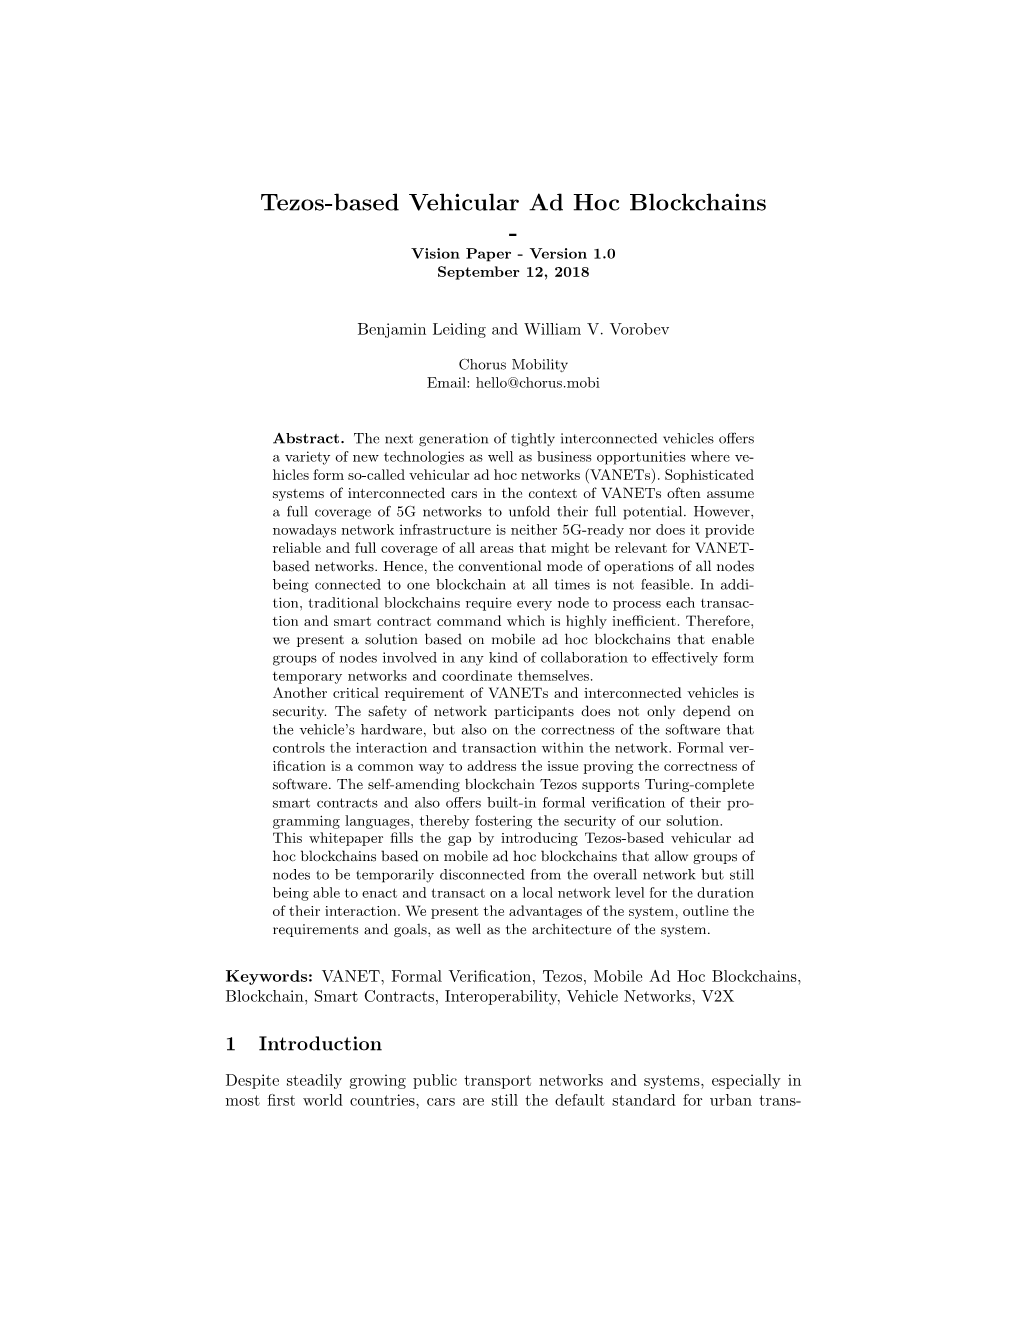 Tezos-Based Vehicular Ad Hoc Blockchains - Vision Paper - Version 1.0 September 12, 2018